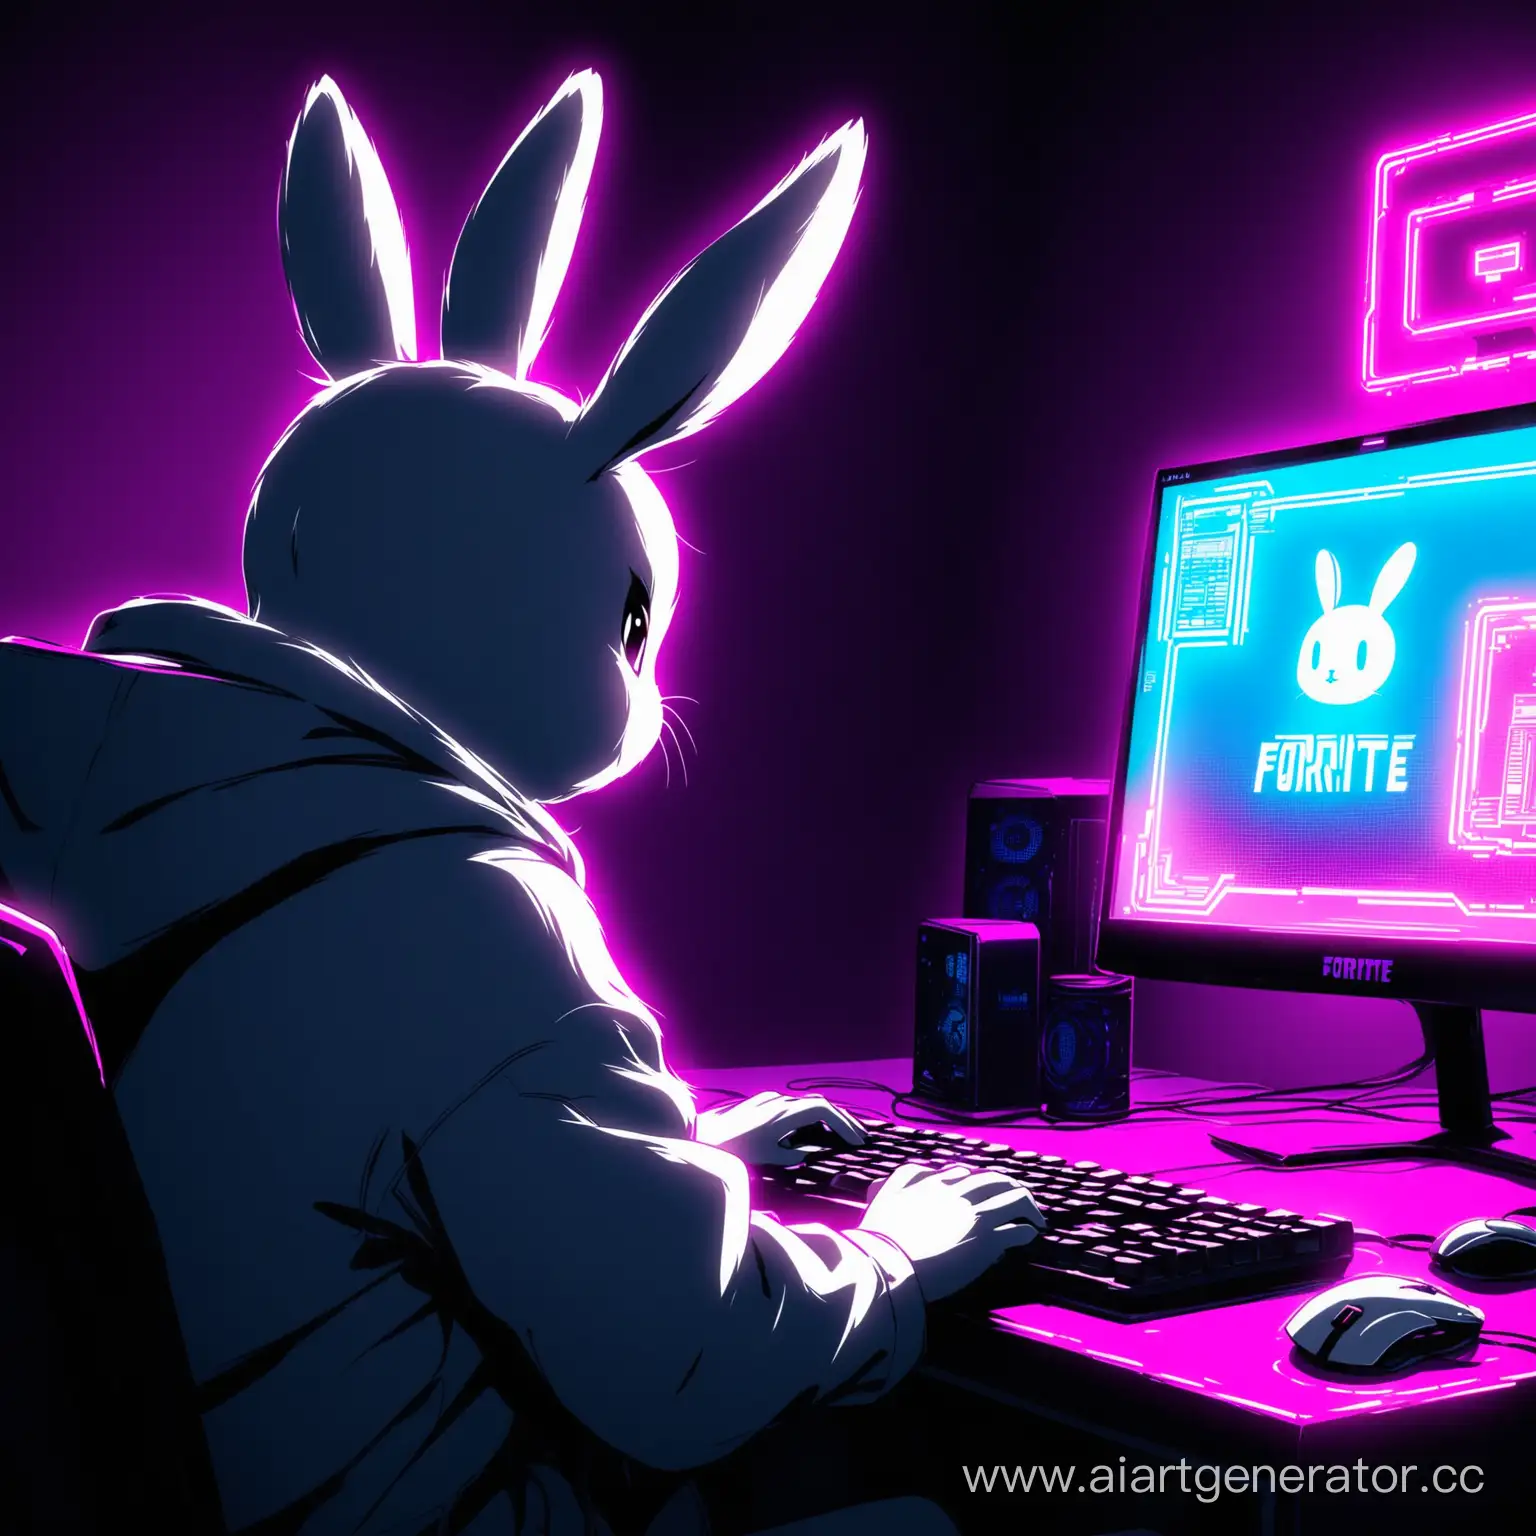 BlackandWhite-Rabbit-Playing-Fortnite-with-Neon-Backlighting